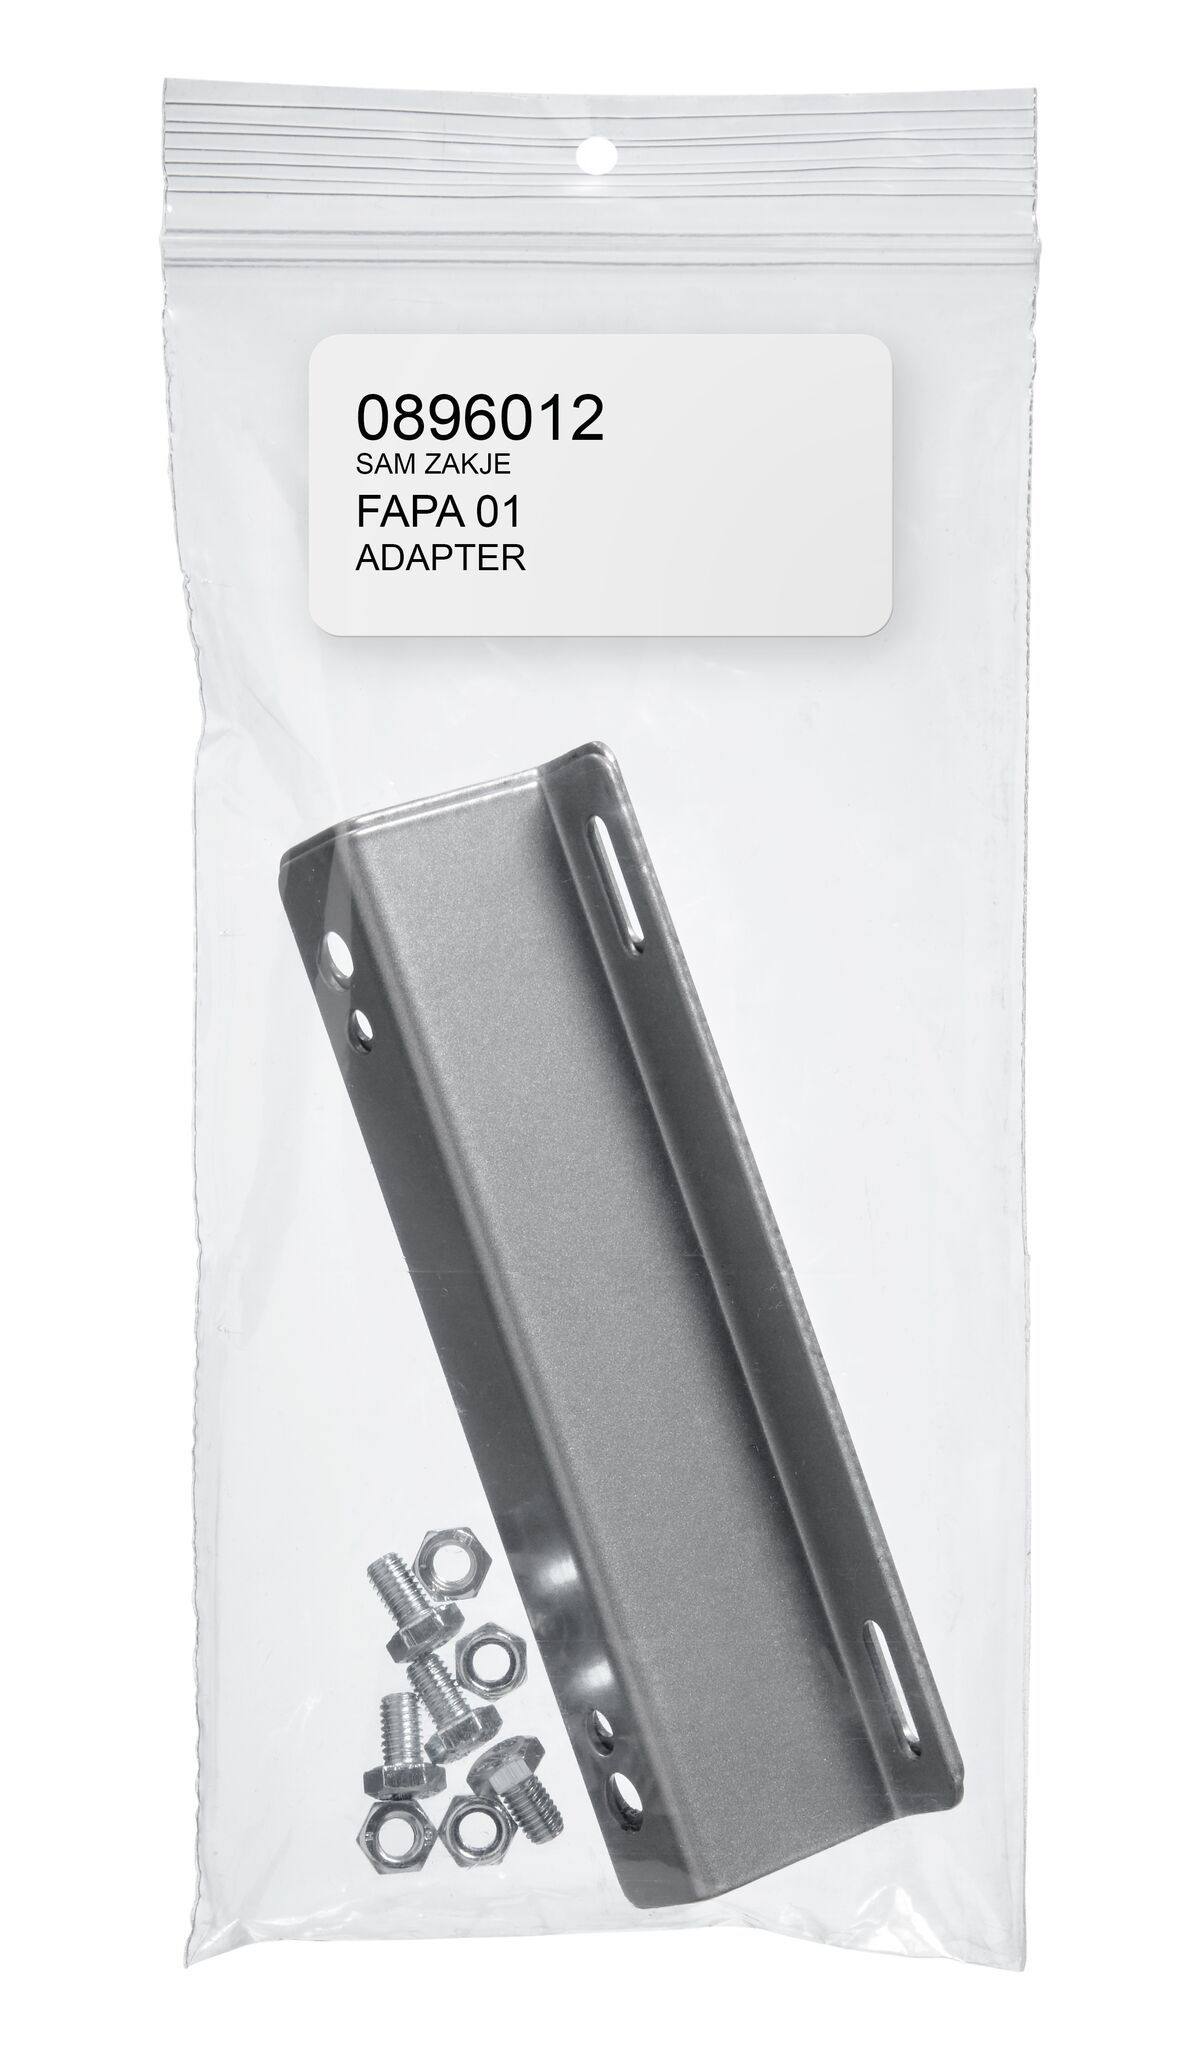 Vogel's Adaptor Kit - FAPA - Product